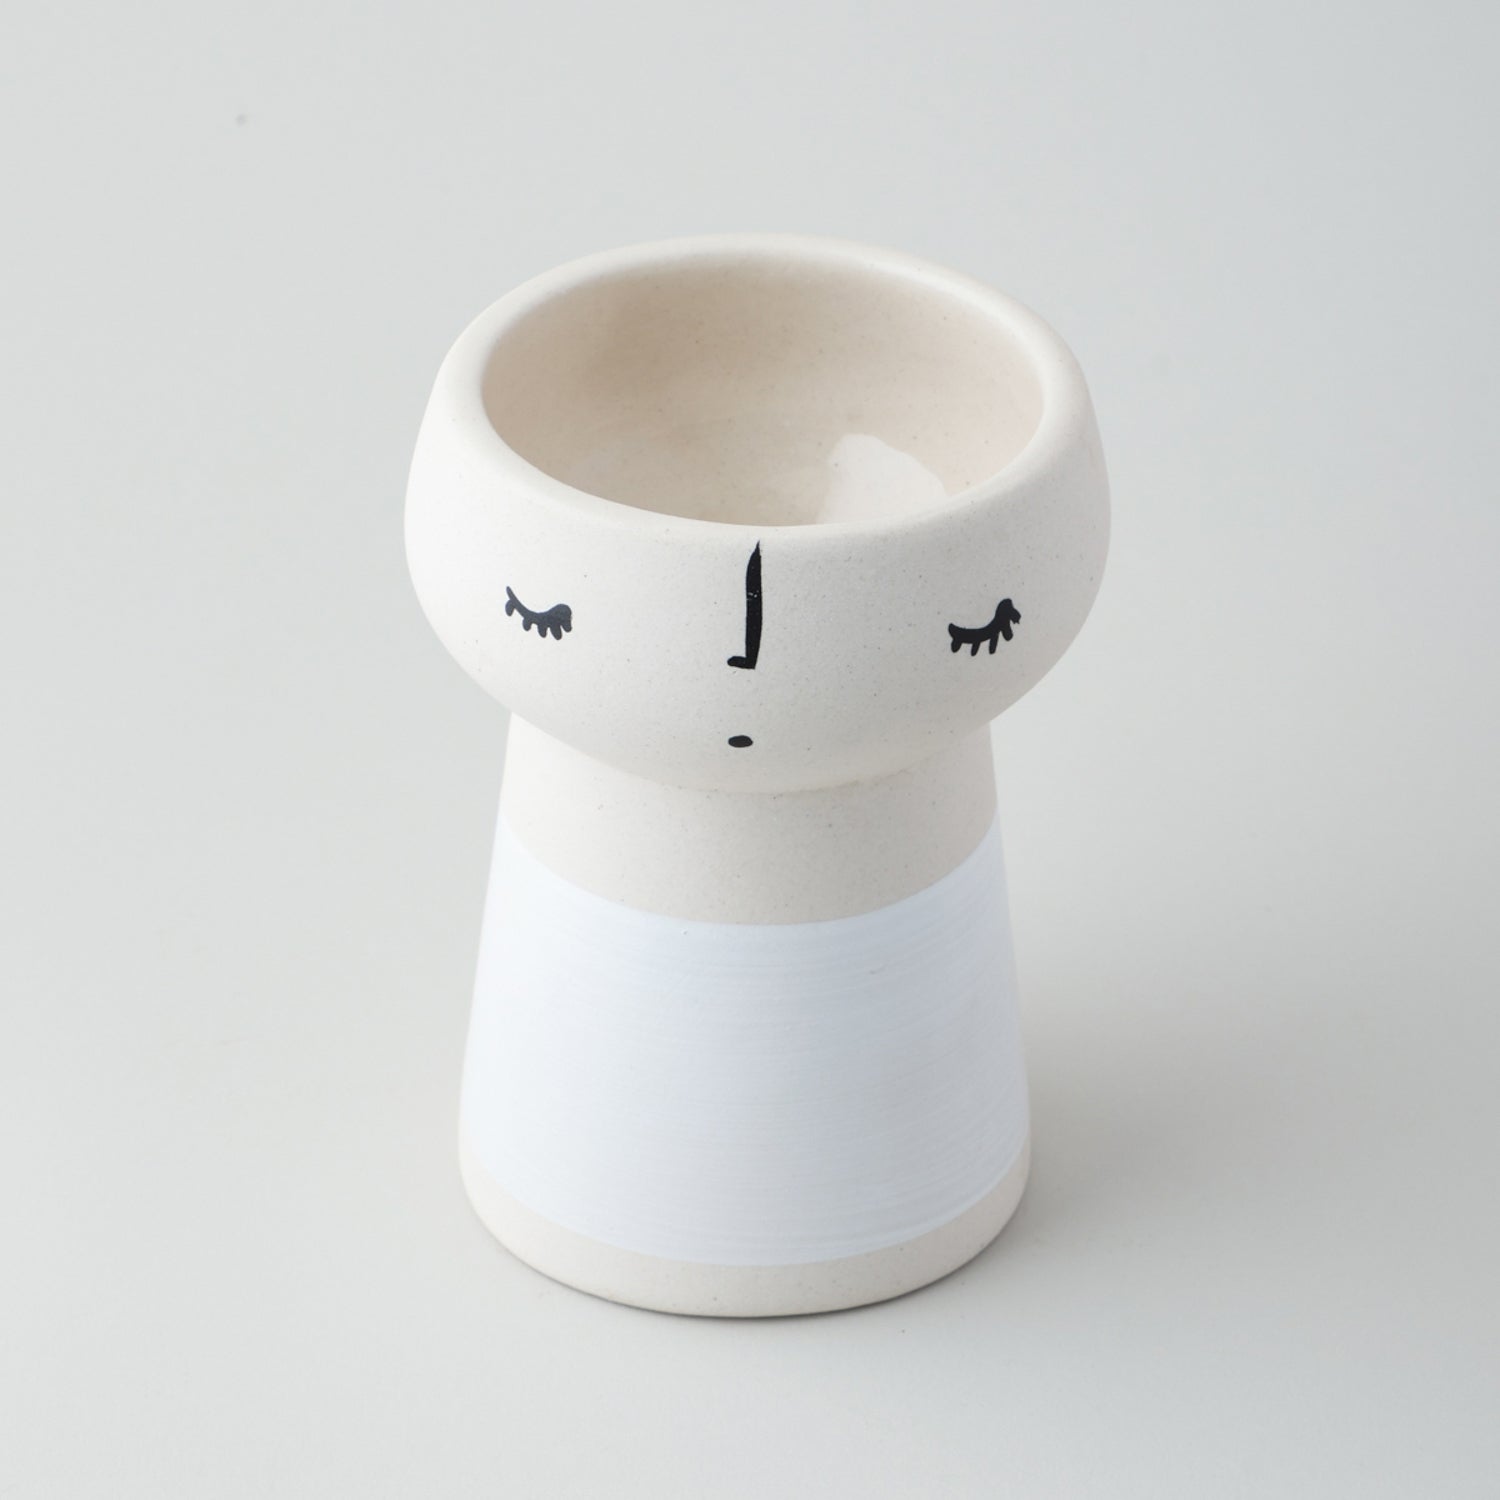 Ceramic Flower Vase (Set of 2) Colour Block White & Grey 5x4